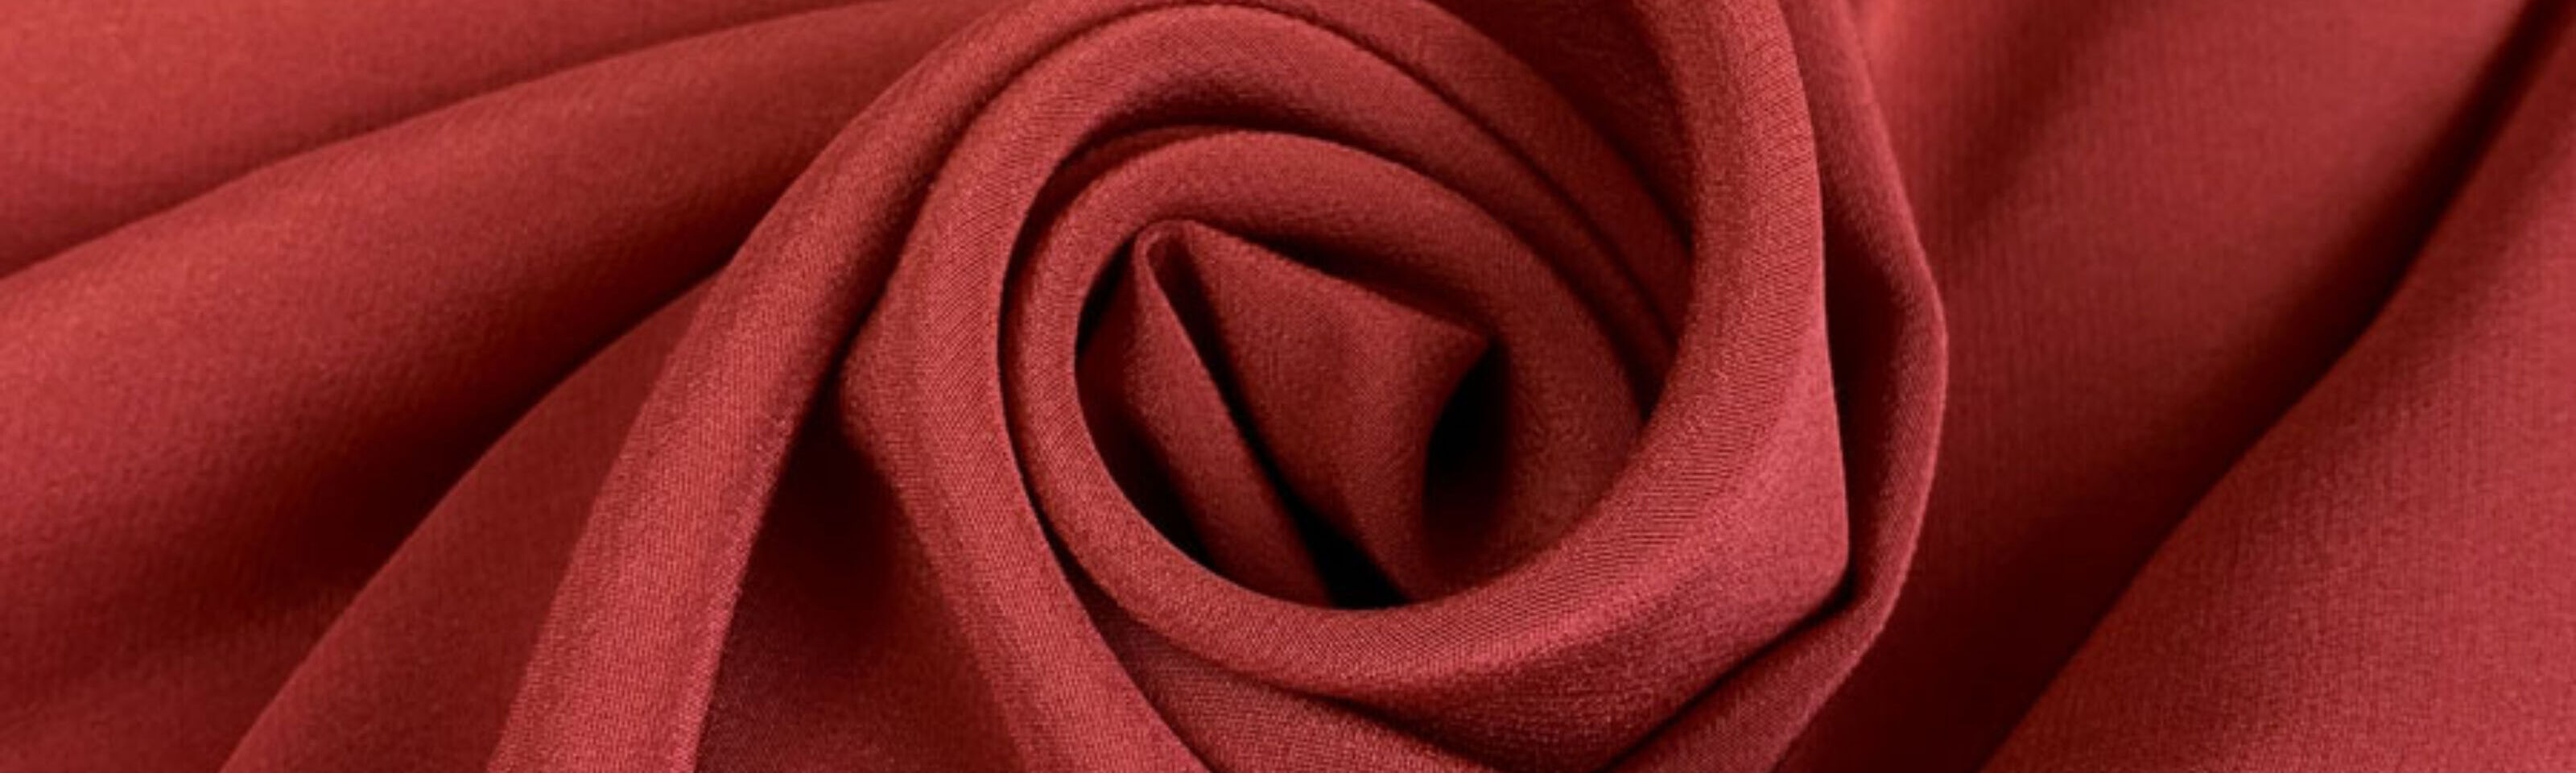 Silk - Crepe - Fine Red Silk Crepe Dress Fabric - Close Up Drape Fabric Photo